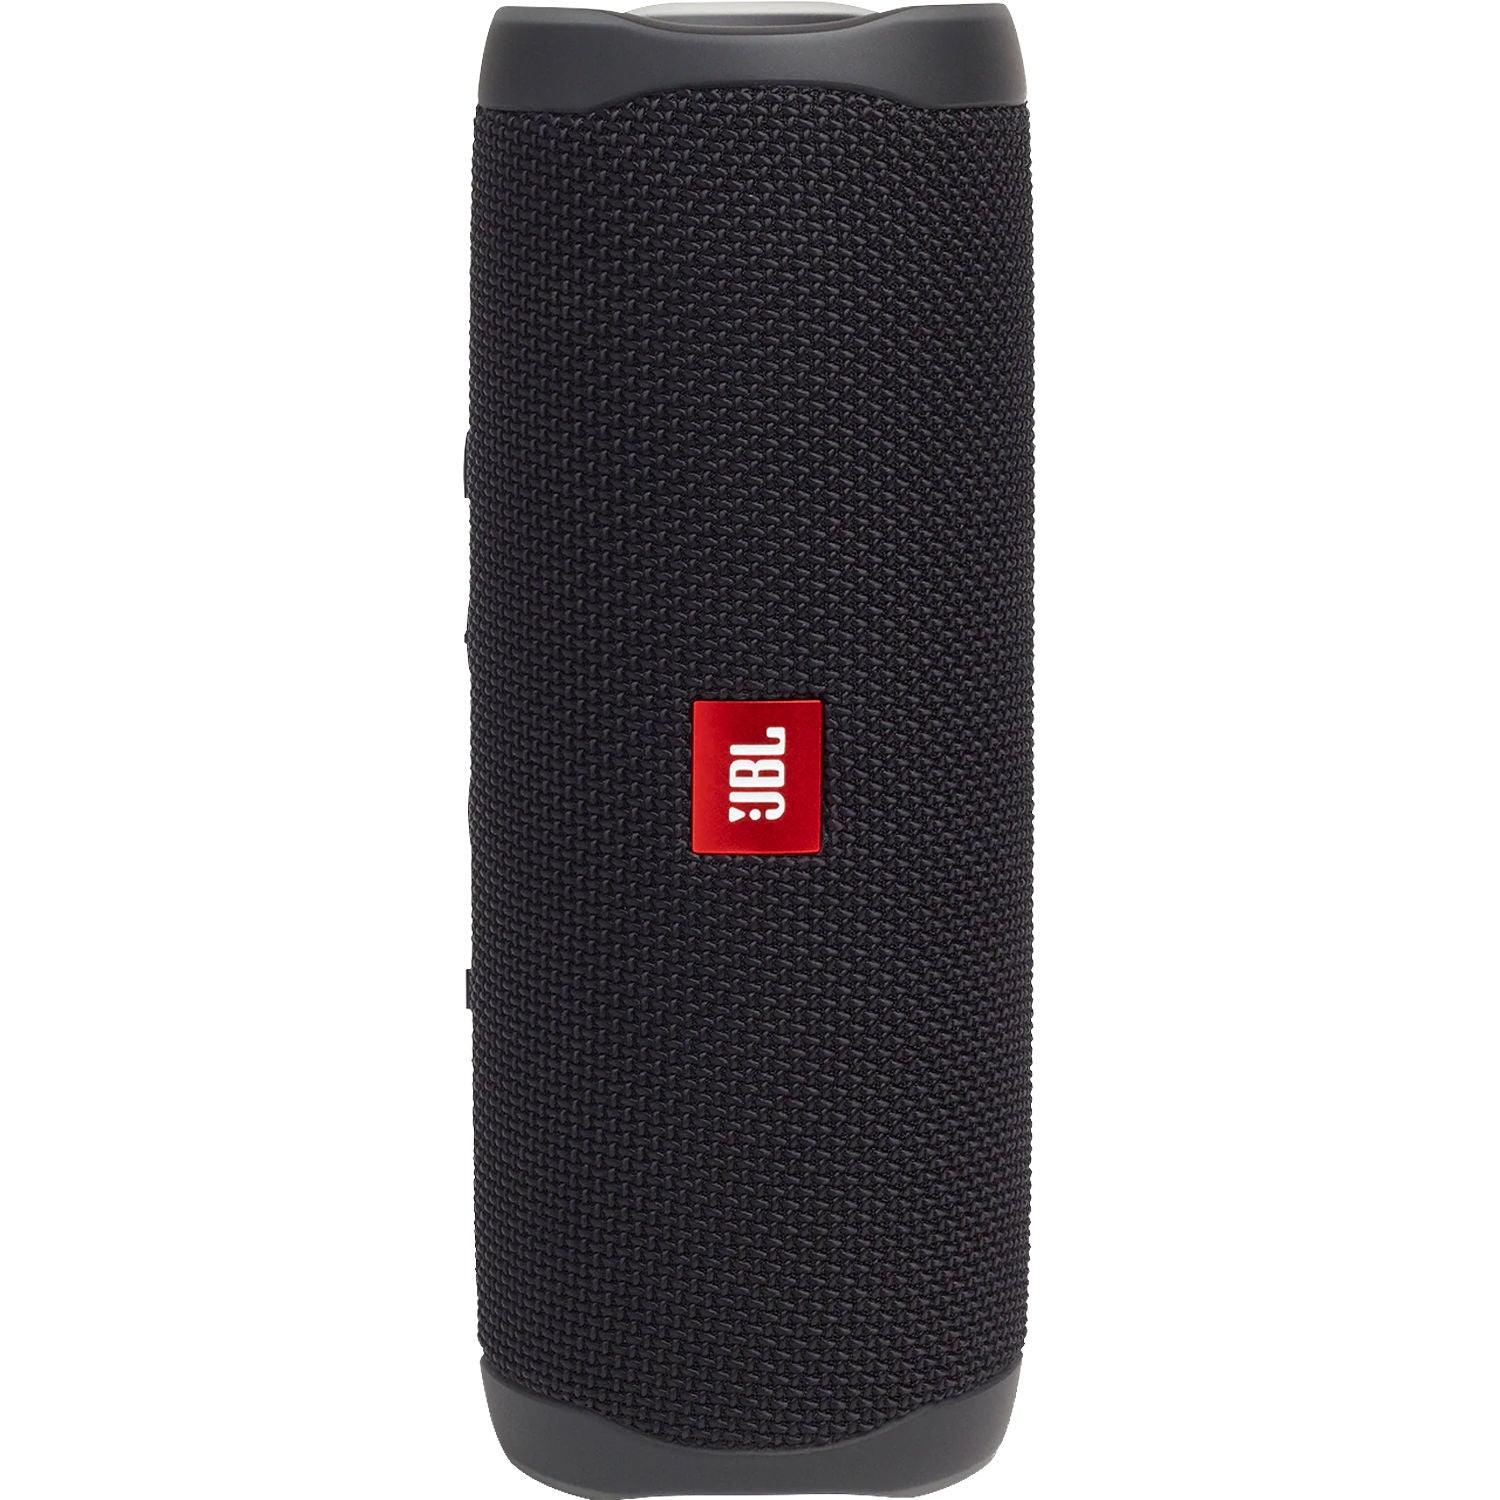 JBL Flip 5 Waterproof Wireless Portable Bluetooth Speaker - GG - Black (Refurbished)